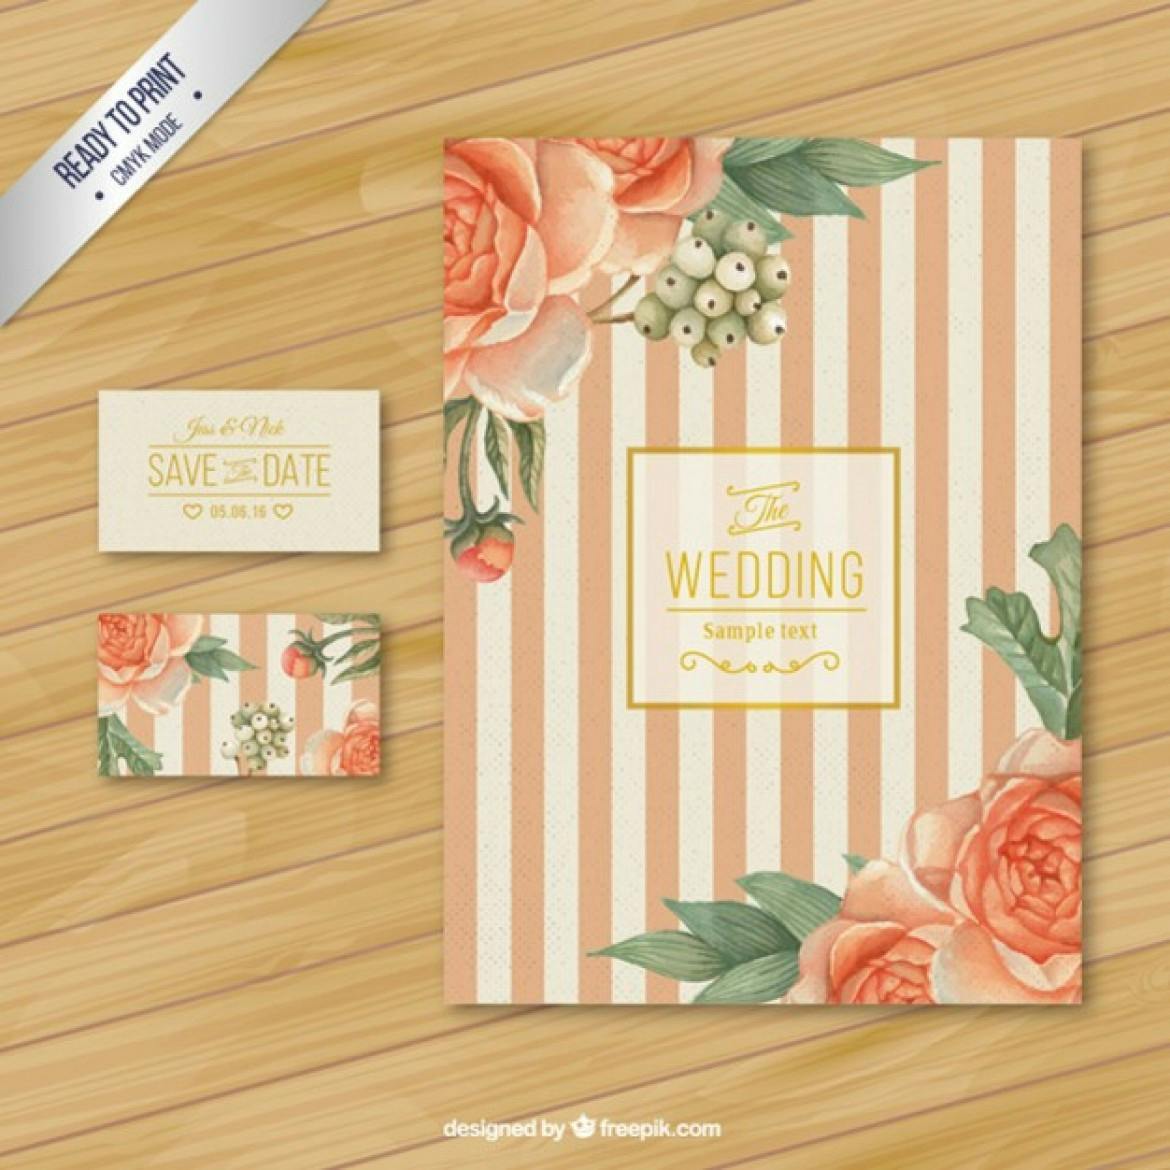 wpid-retro-wedding-invitation-with-roses_23-2147517354-1170x1170